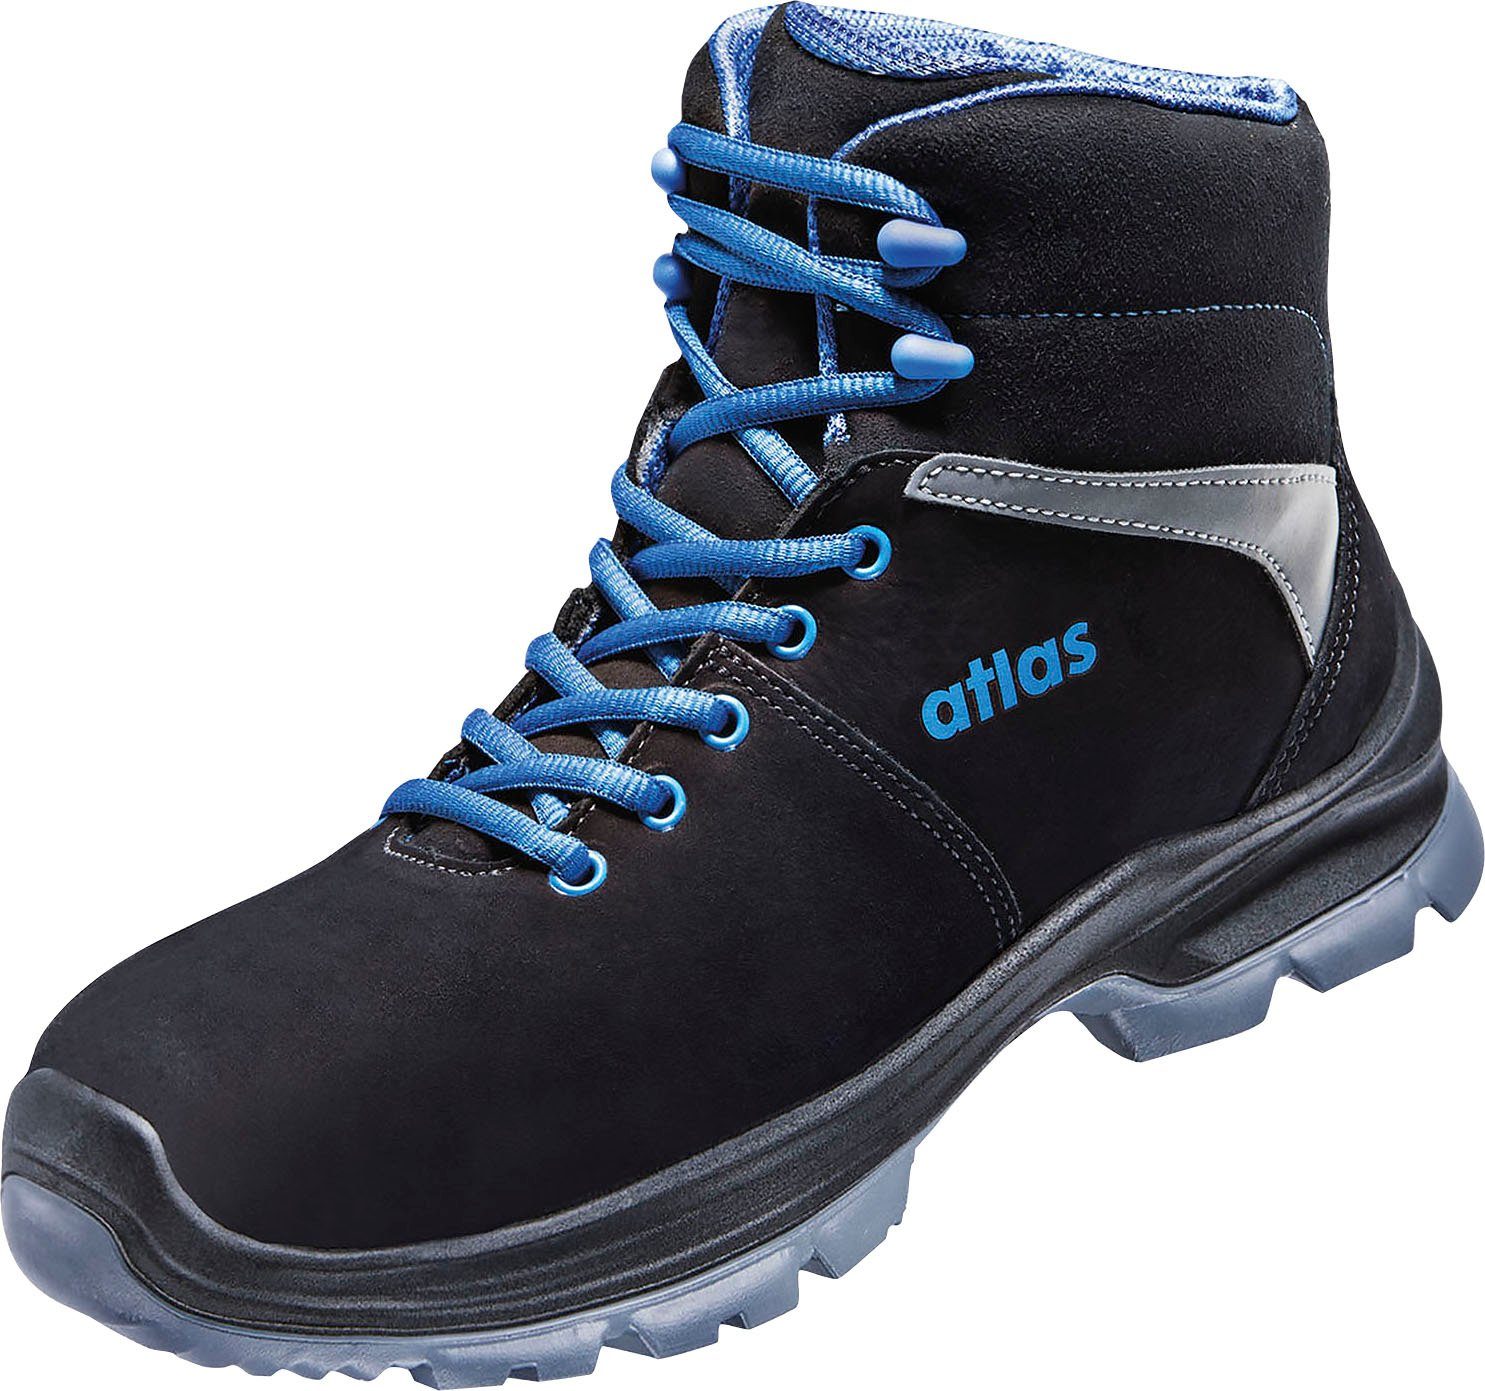 Atlas Schuhe 494 XP S3 SL Sicherheitsschuh ESD EN20345 805 2.0 blue